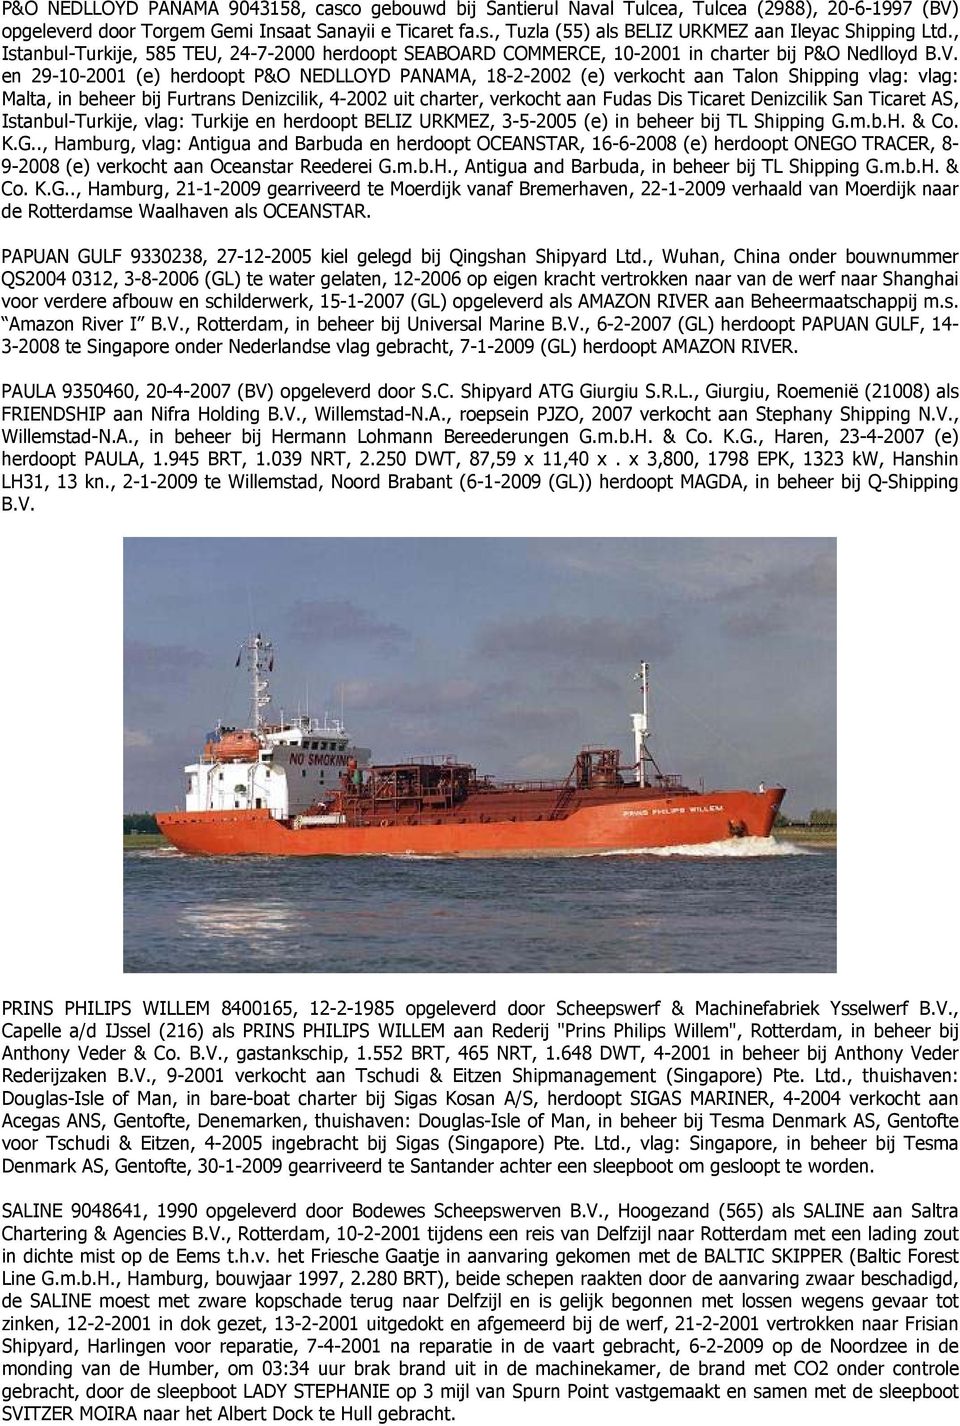 en 29-10-2001 (e) herdoopt P&O NEDLLOYD PANAMA, 18-2-2002 (e) verkocht aan Talon Shipping vlag: vlag: Malta, in beheer bij Furtrans Denizcilik, 4-2002 uit charter, verkocht aan Fudas Dis Ticaret